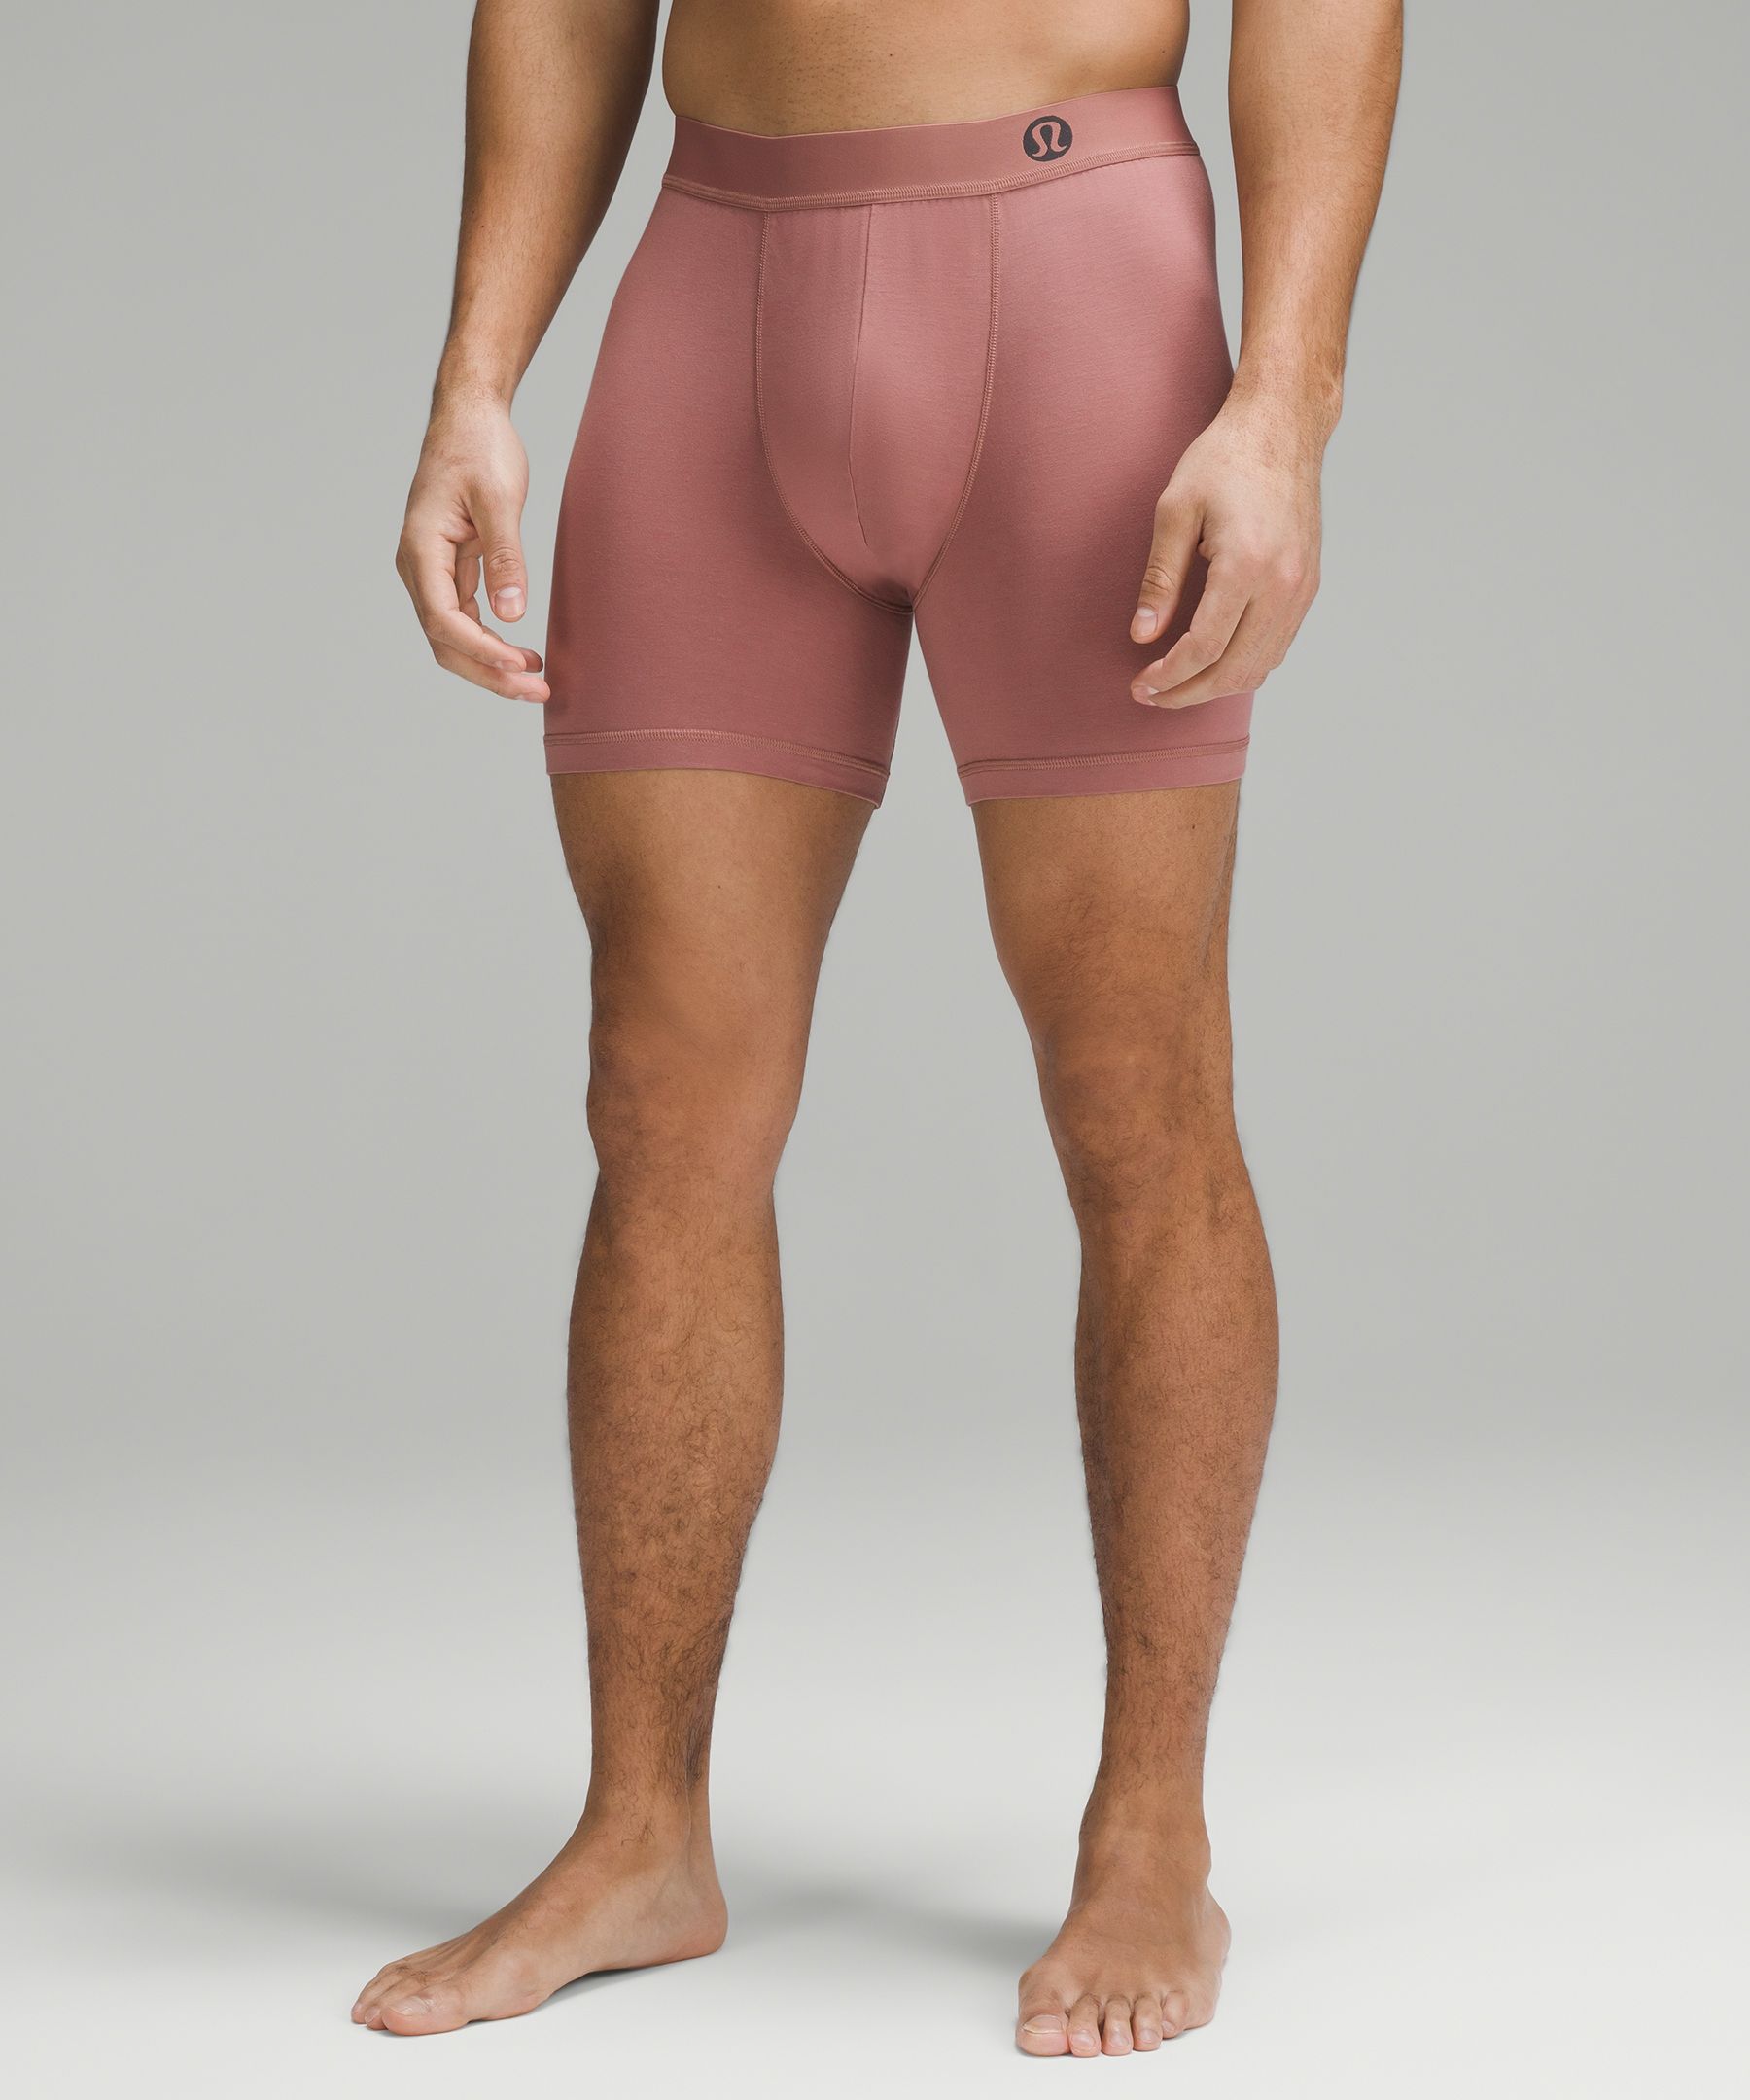 Men's White Underwear [Jockey Sport microfiber briefs], Men's Fashion,  Bottoms, New Underwear on Carousell